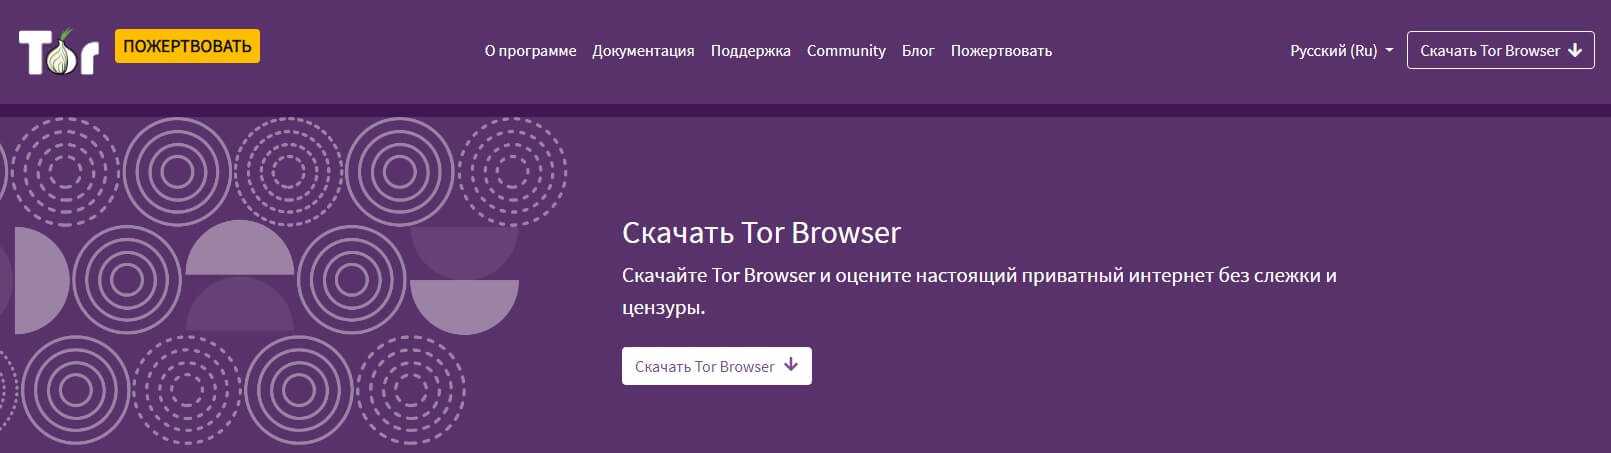 Даркнет официальный сайт монстры загрузка tor browser bundle гирда